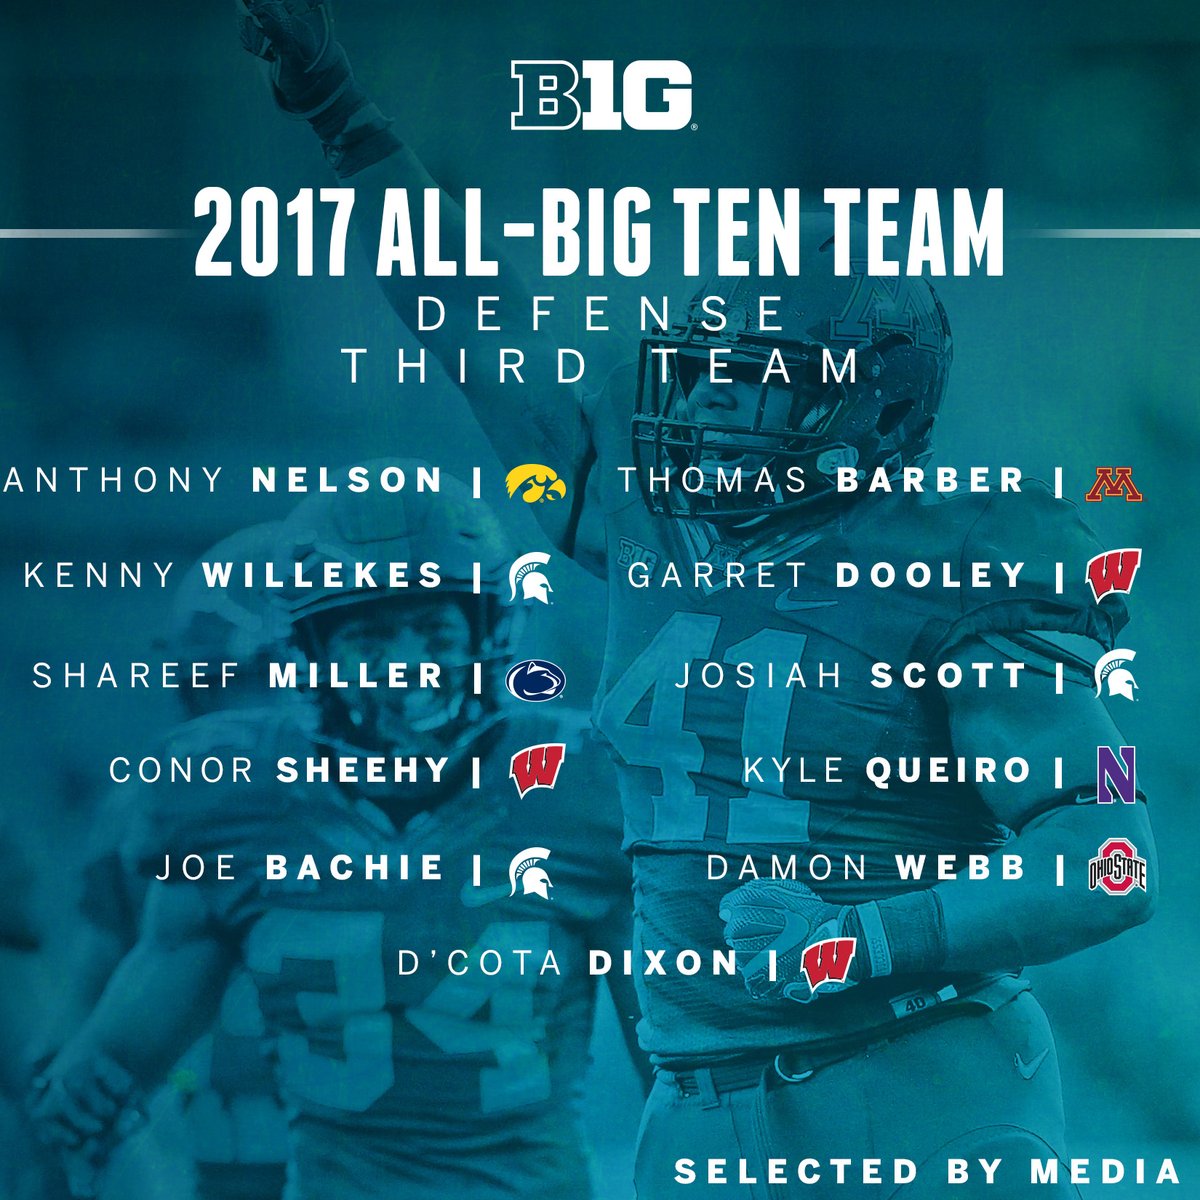 All-Big Ten Defense Third Team, as selected by media